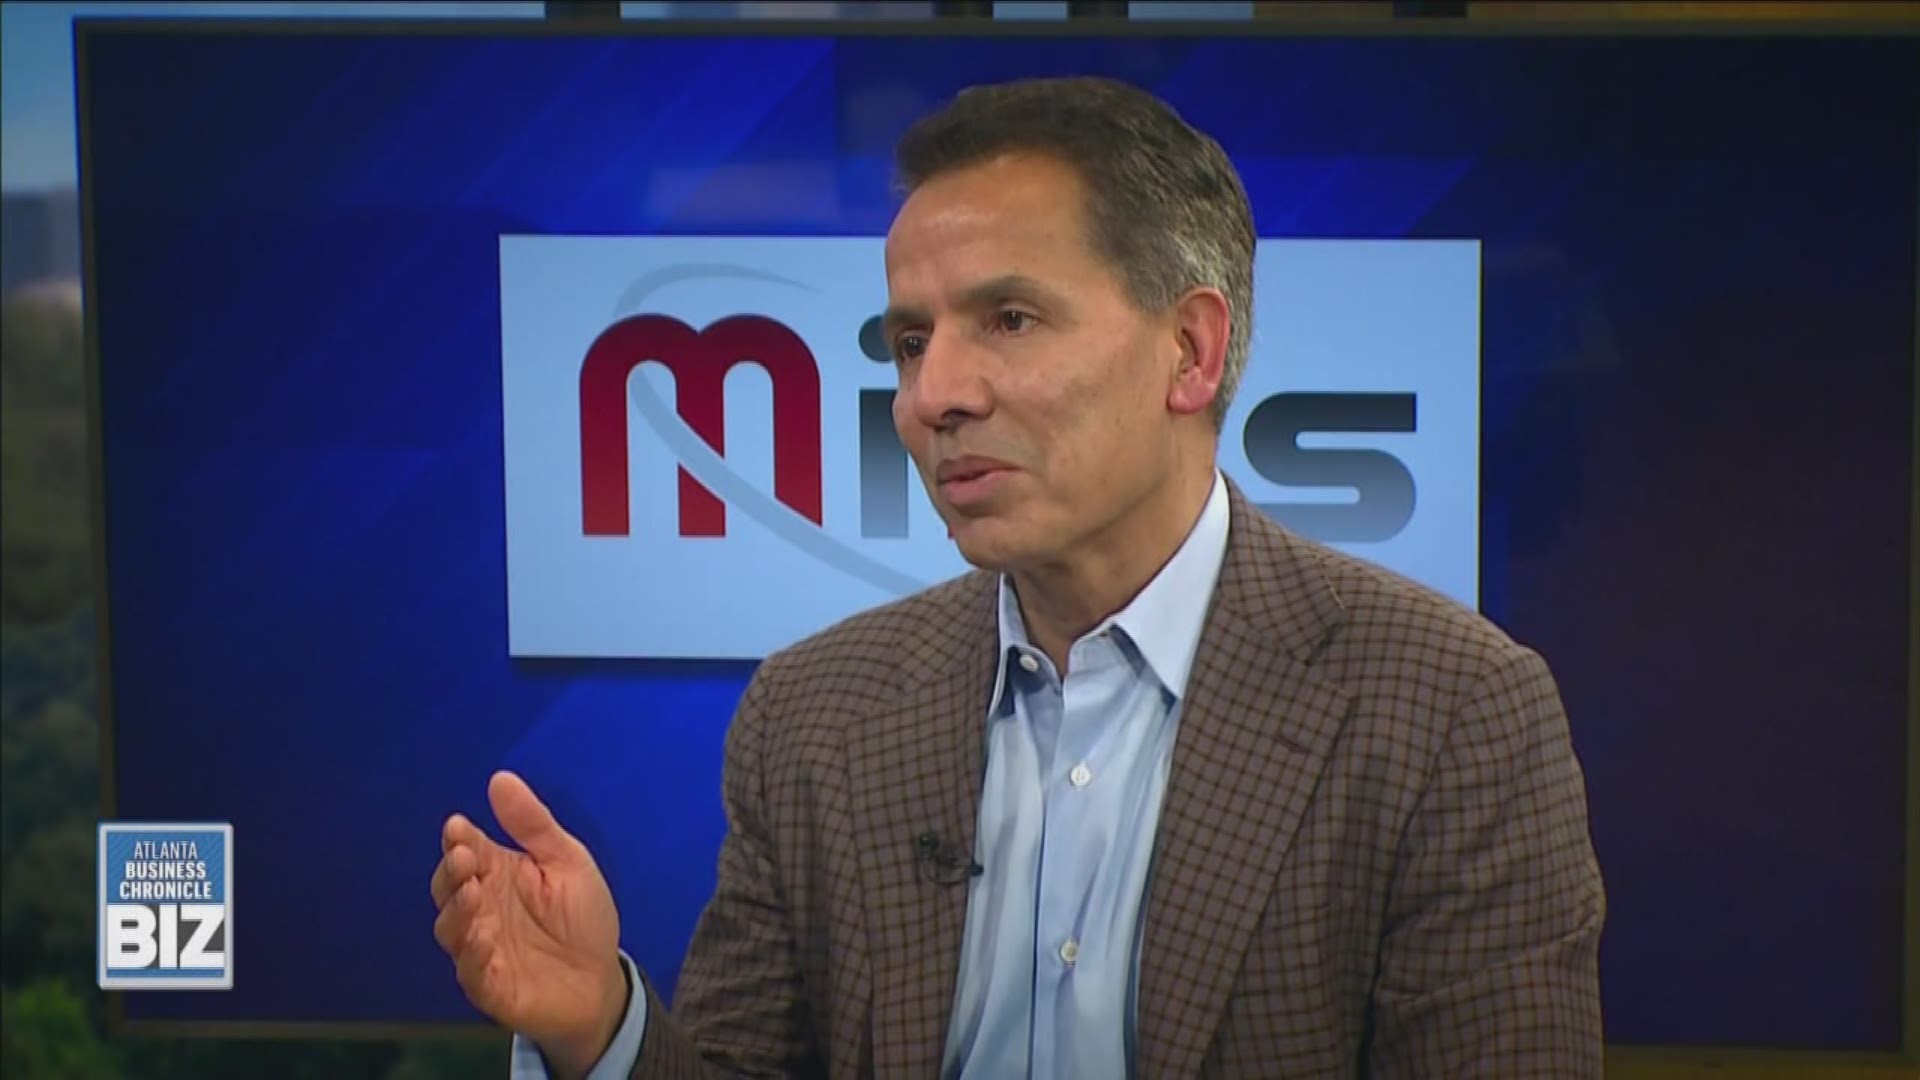 MiRus Founder/CEO Dr. Jay Yadav joins David Rubinger on 'Atlanta Business Chronicle's BIZ'